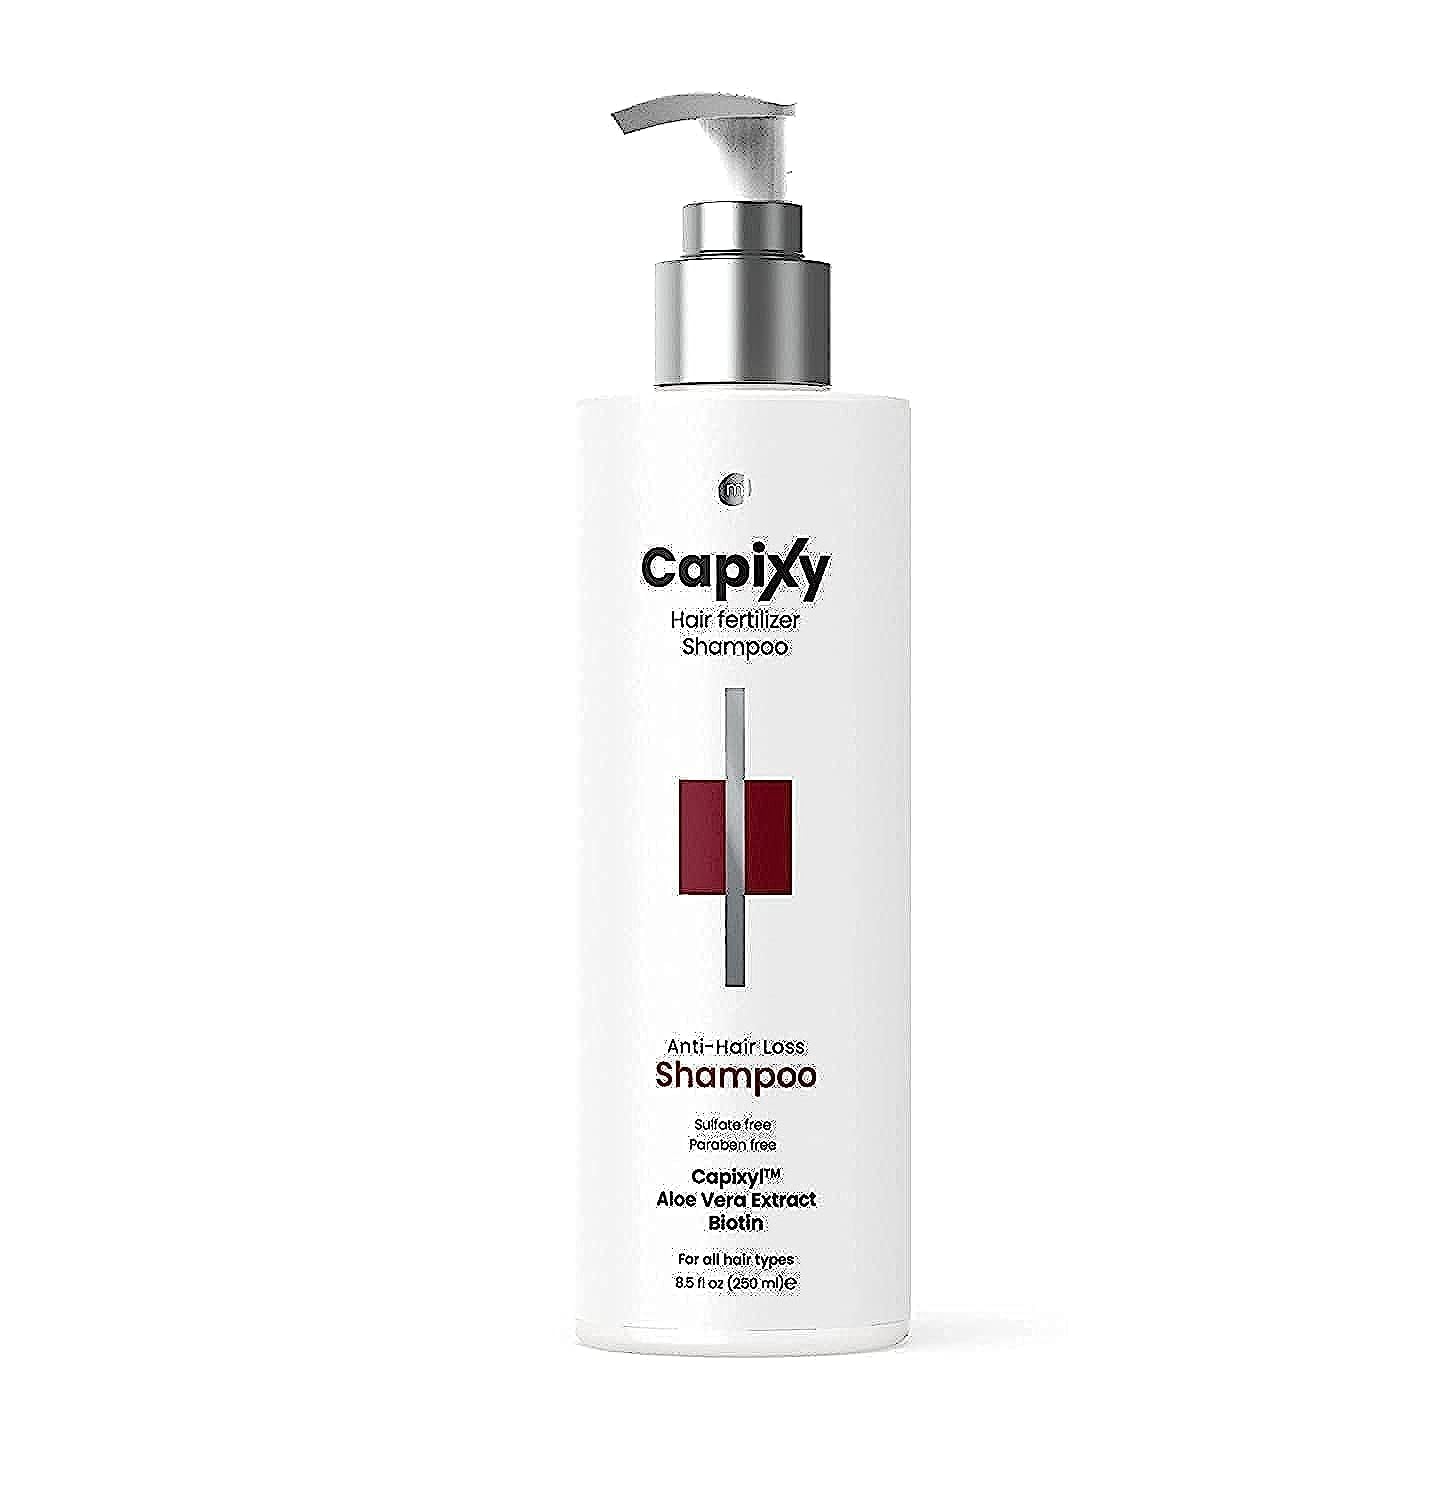 capixy shampoo 250ml